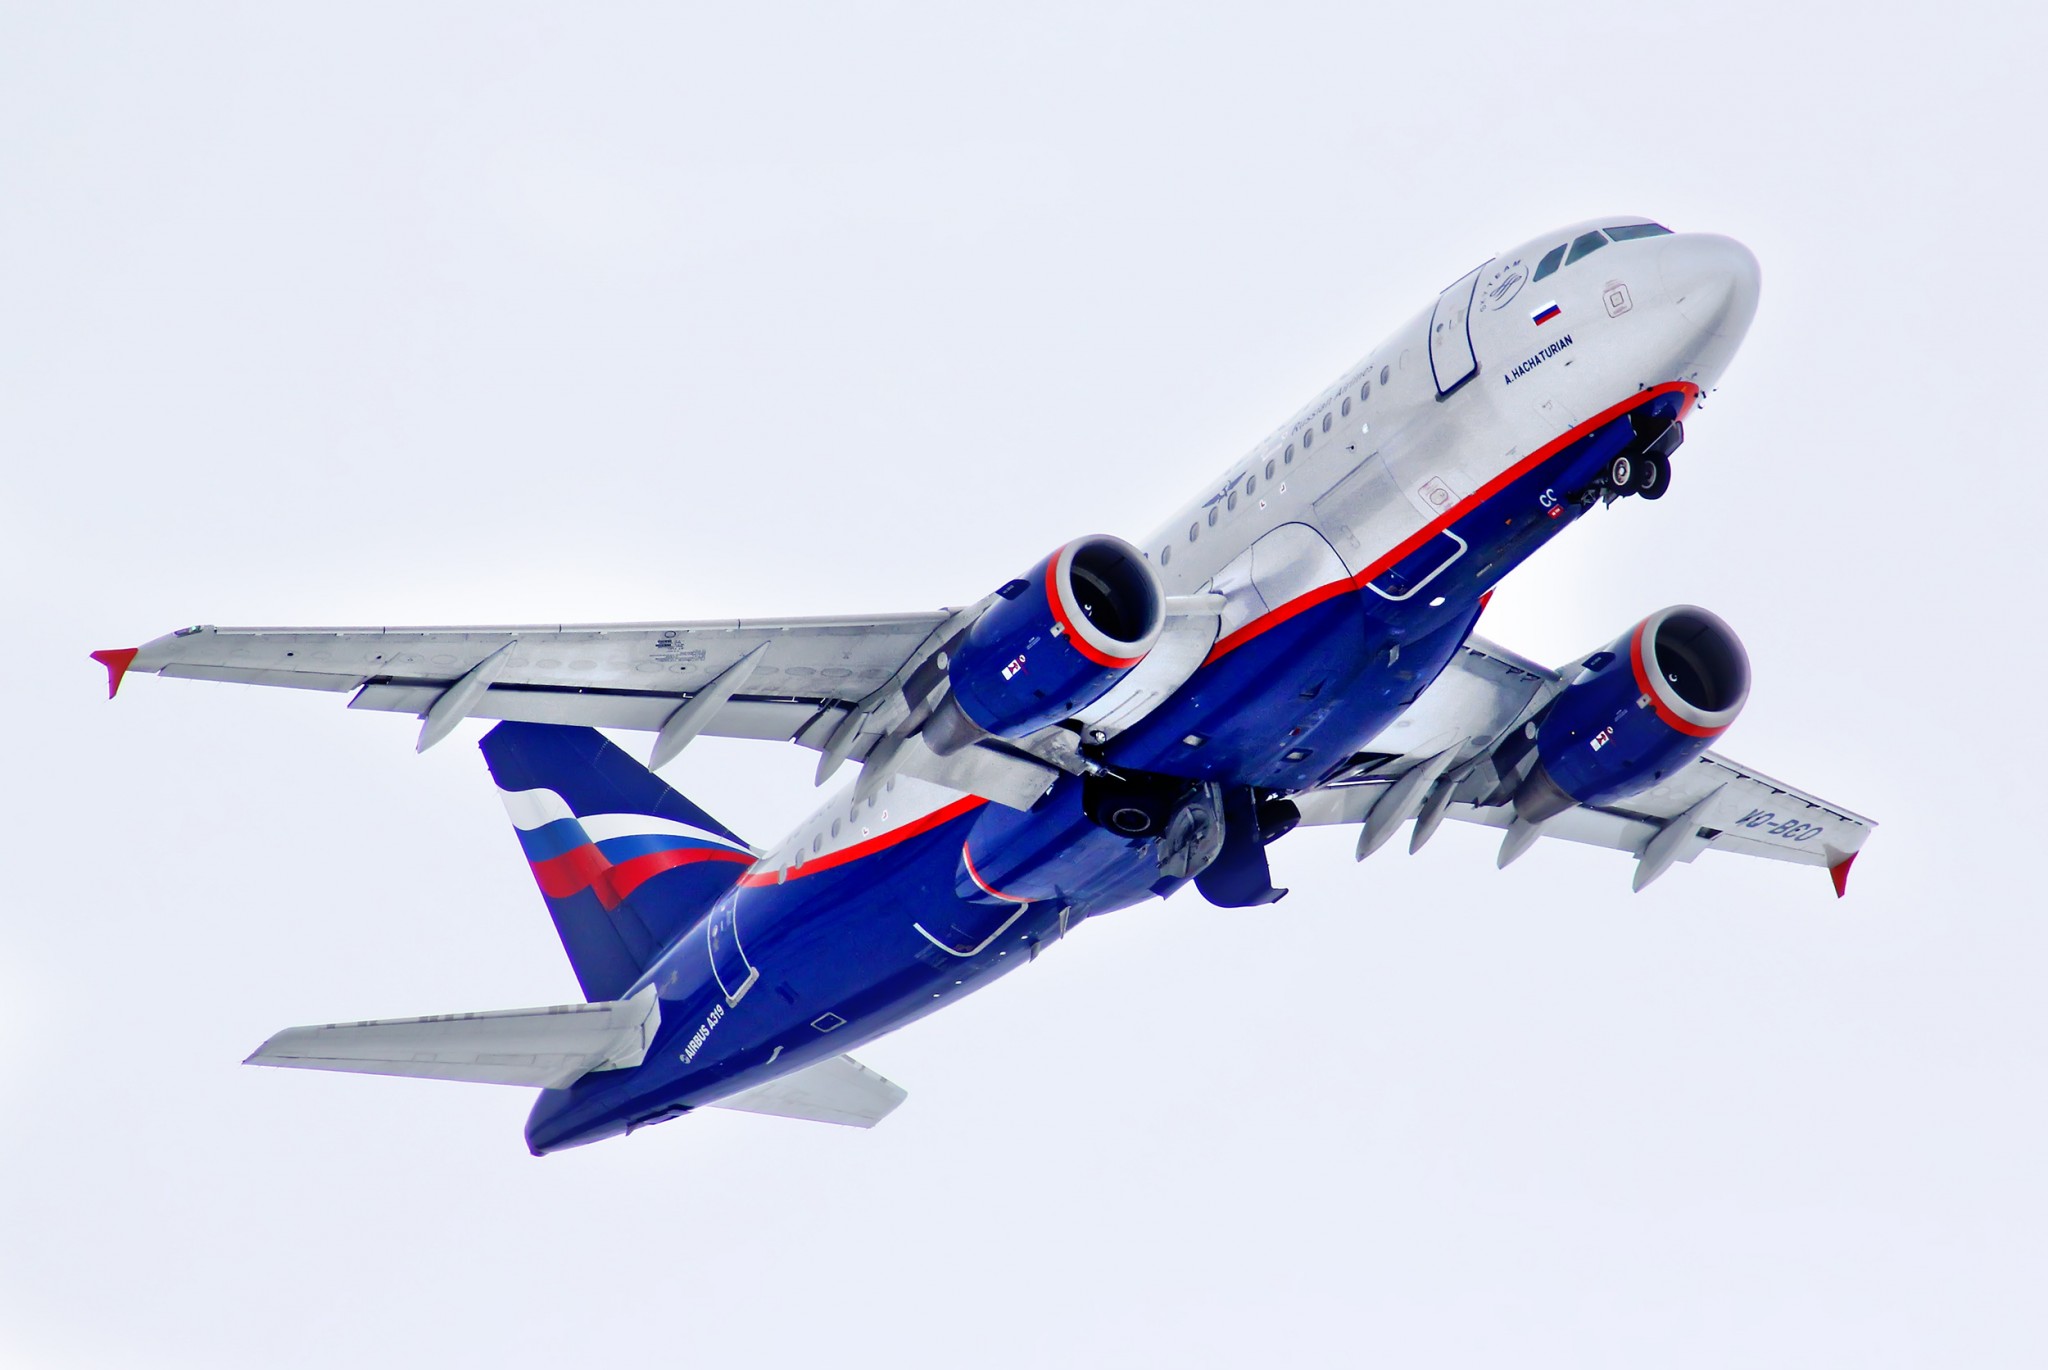 Aeroflot passenger traffic up 10.2% in YTD 2016